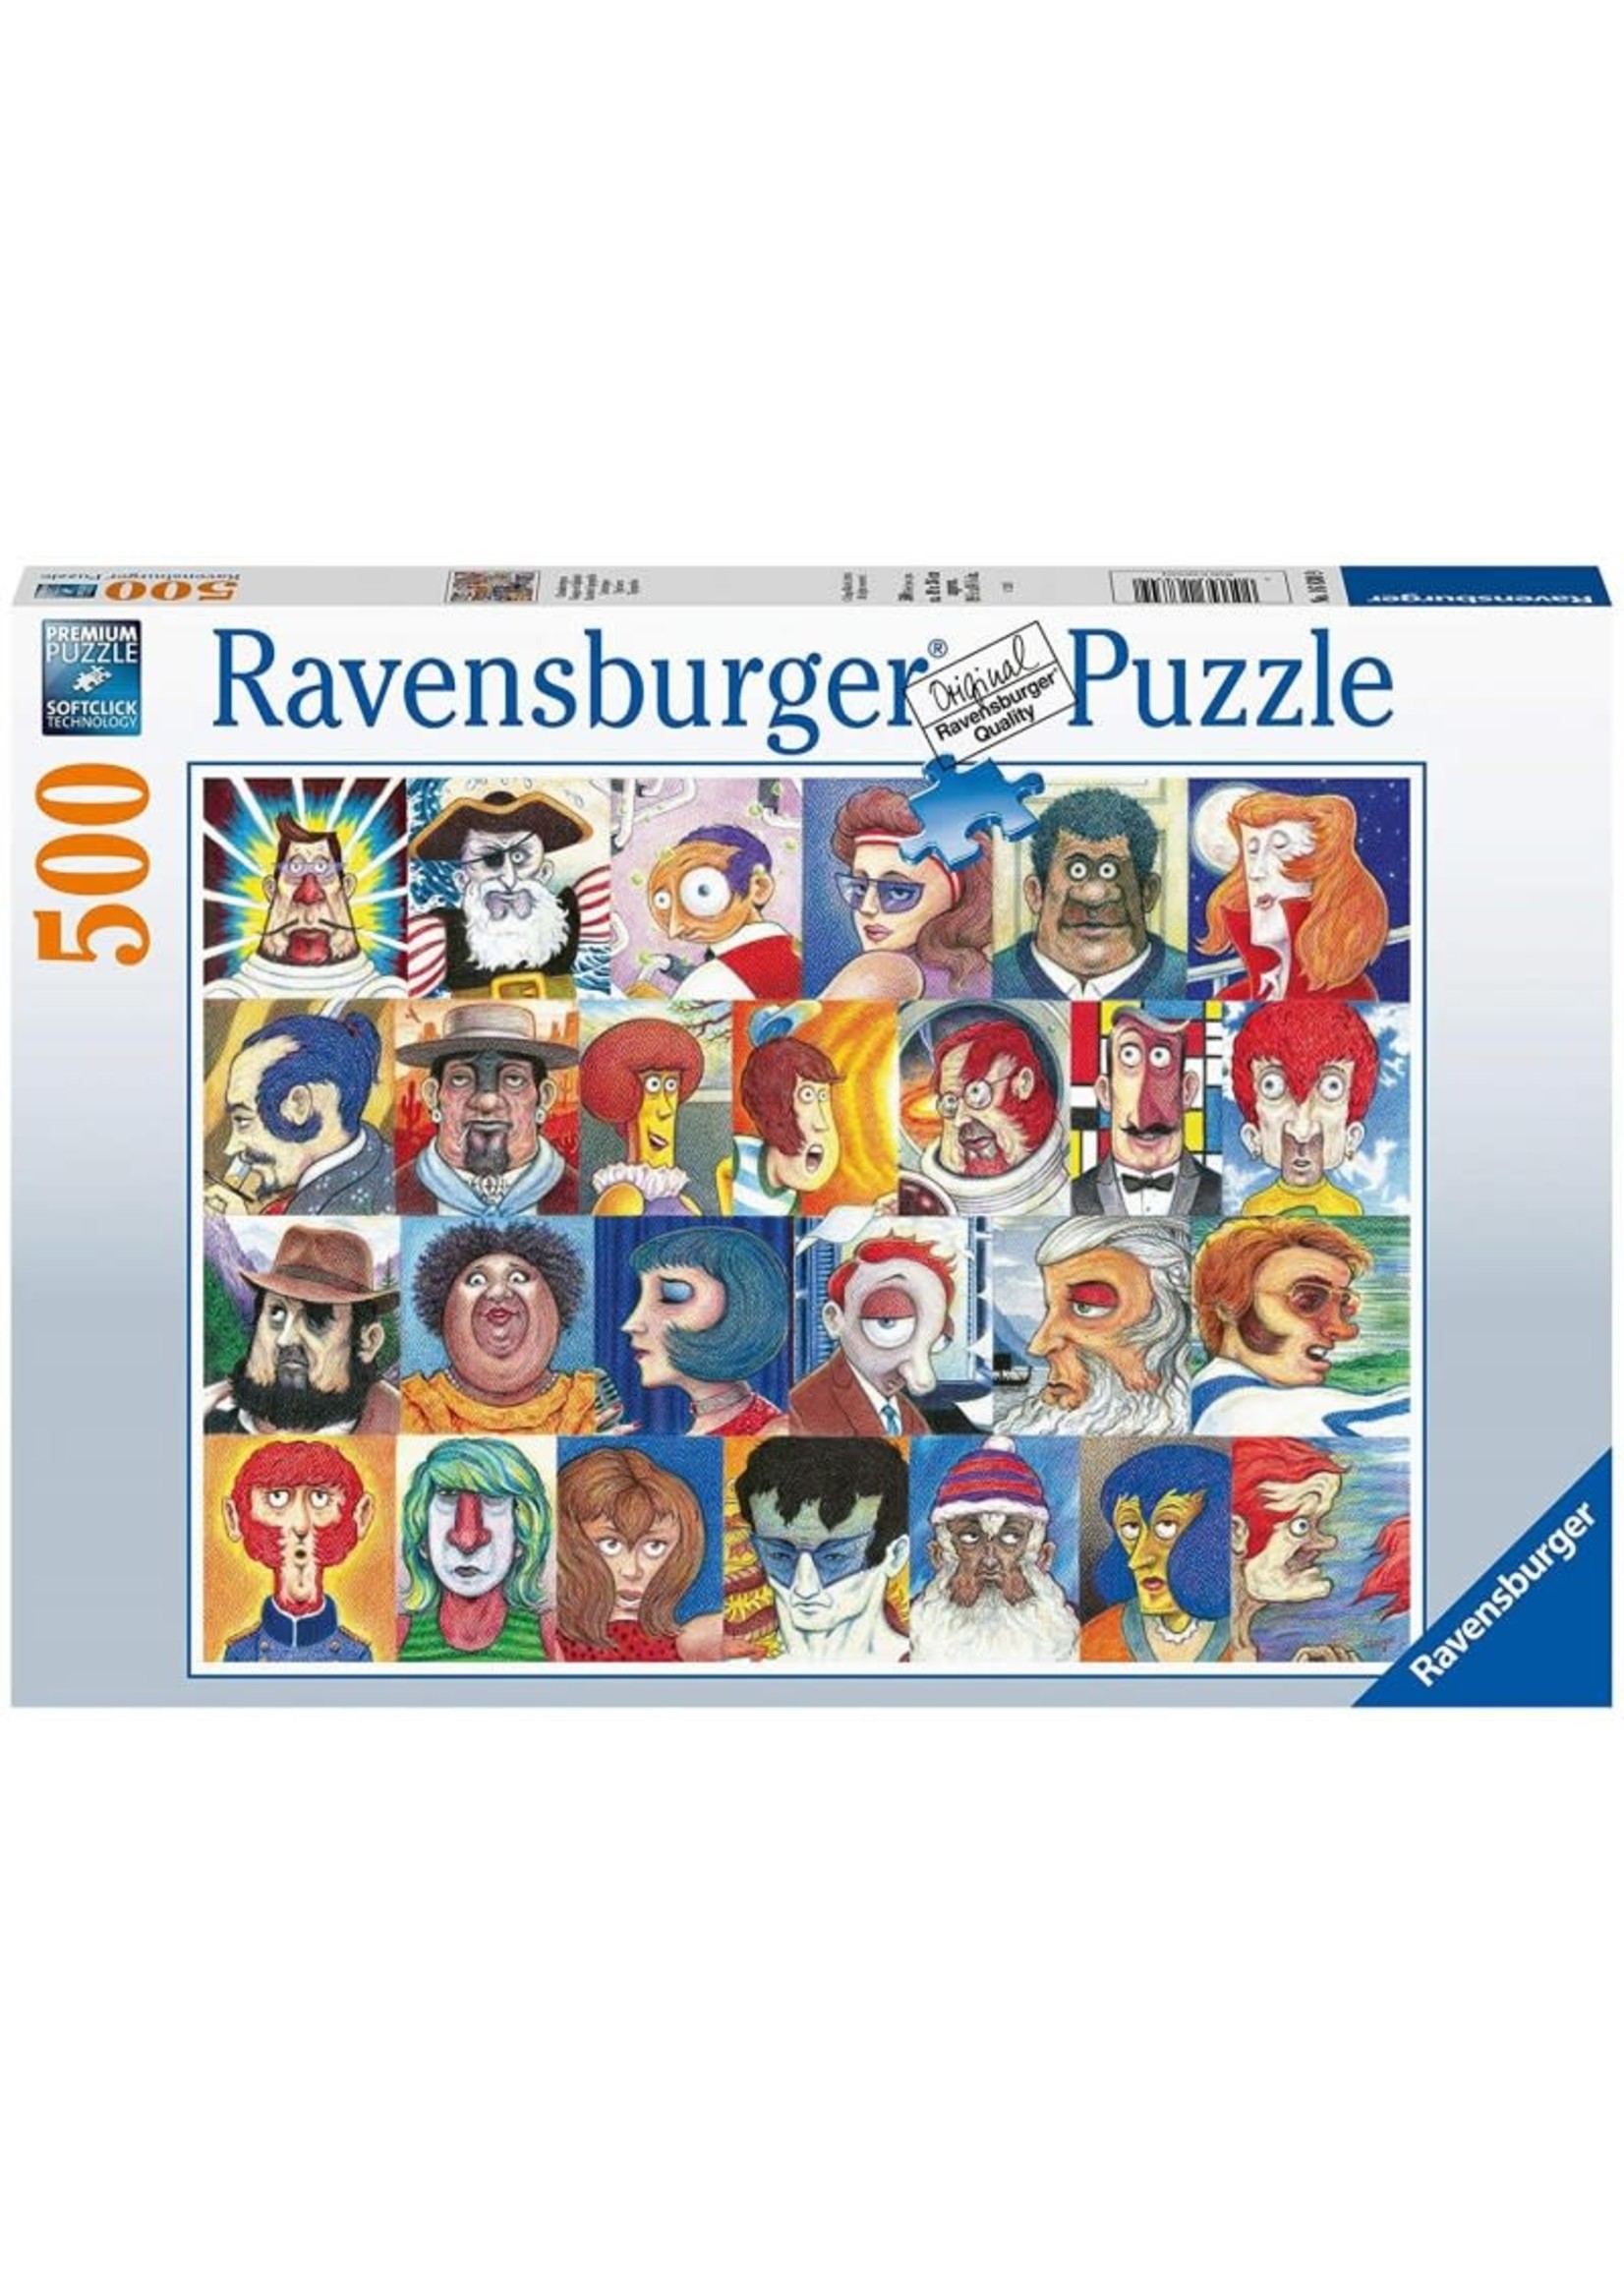 Ravensburger Puzzle Ravensburger 500 pcs: Lettertypes